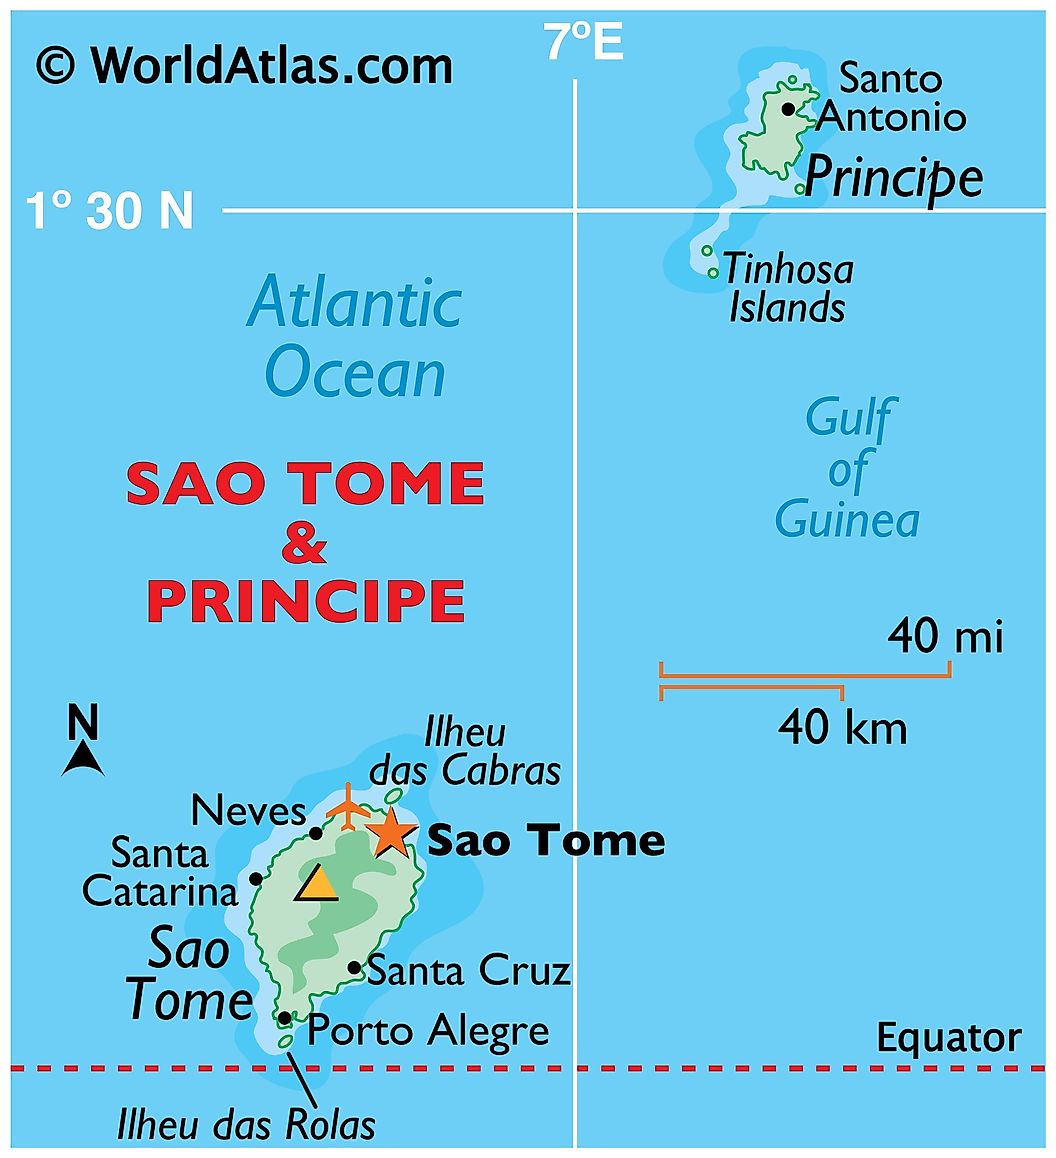 [Update] Bản đồ nước São Tomé và Príncipe (Sao Tome and Principe Map) năm 2022 11